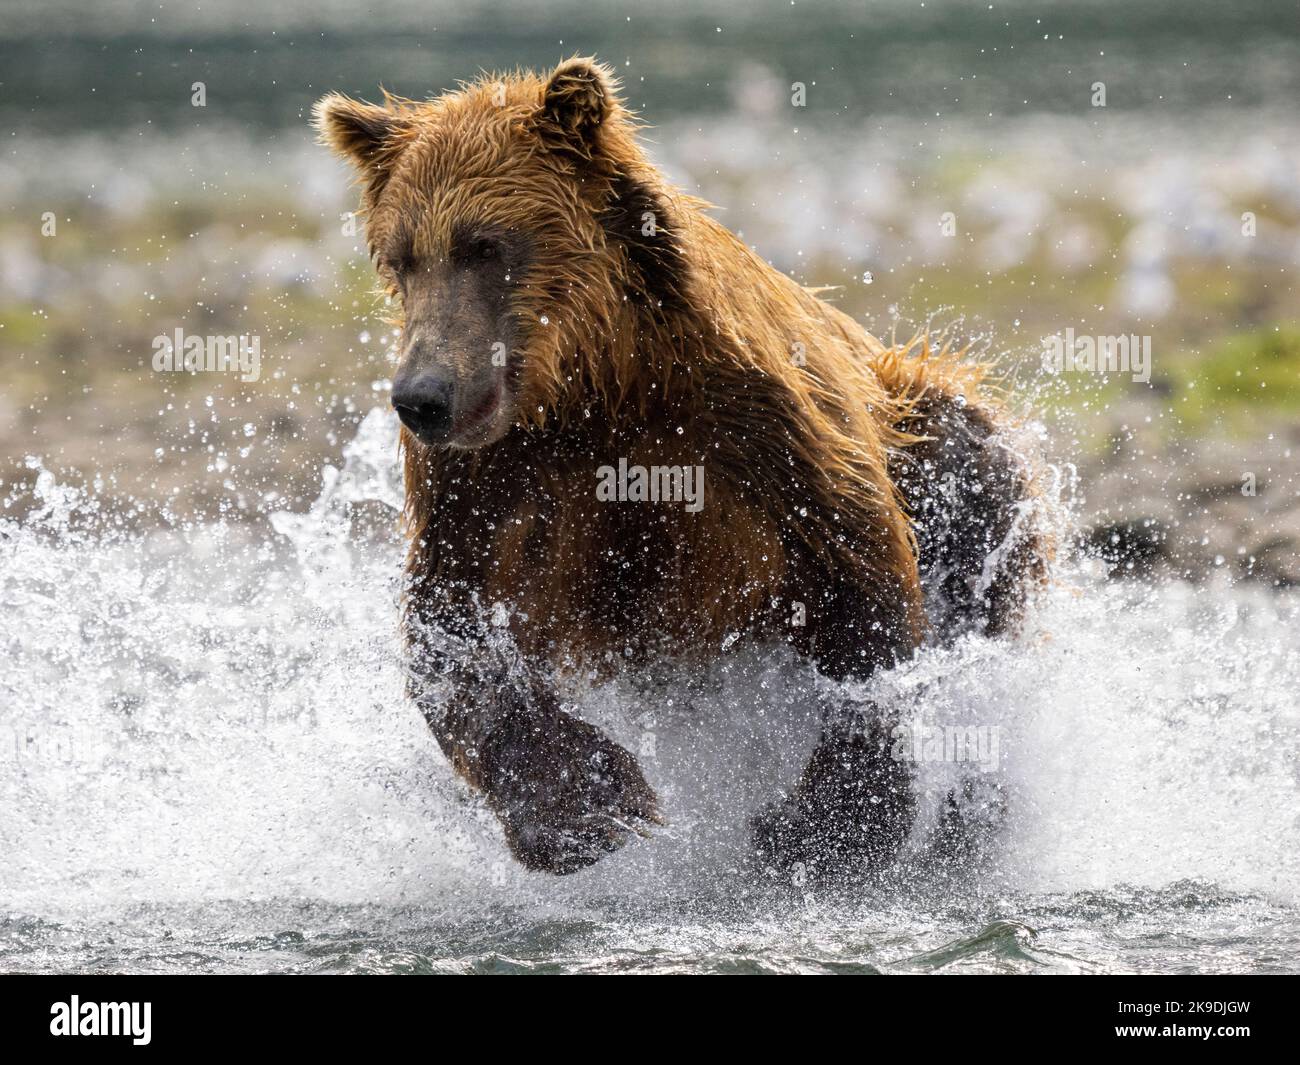 Un orso bruno o grizzly, parco nazionale di Katmai, Alaska. Foto Stock